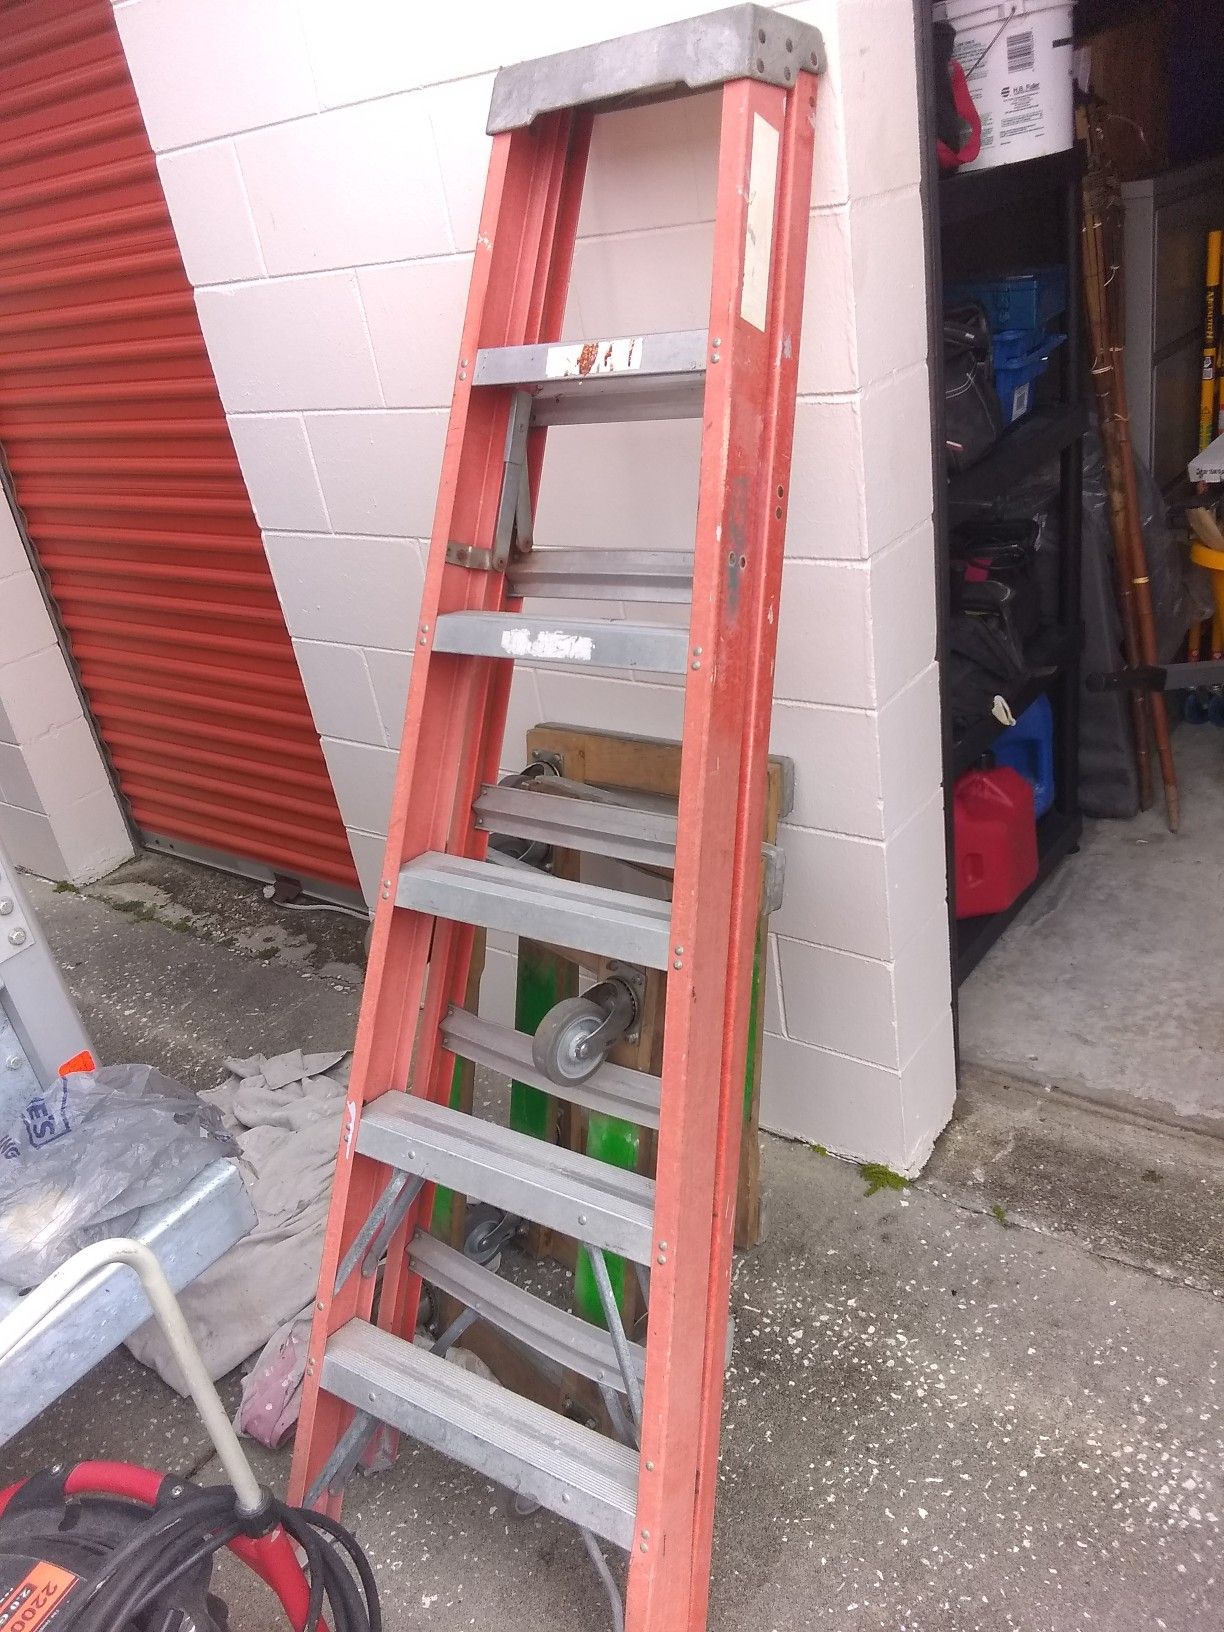 6 foot Werner ladder